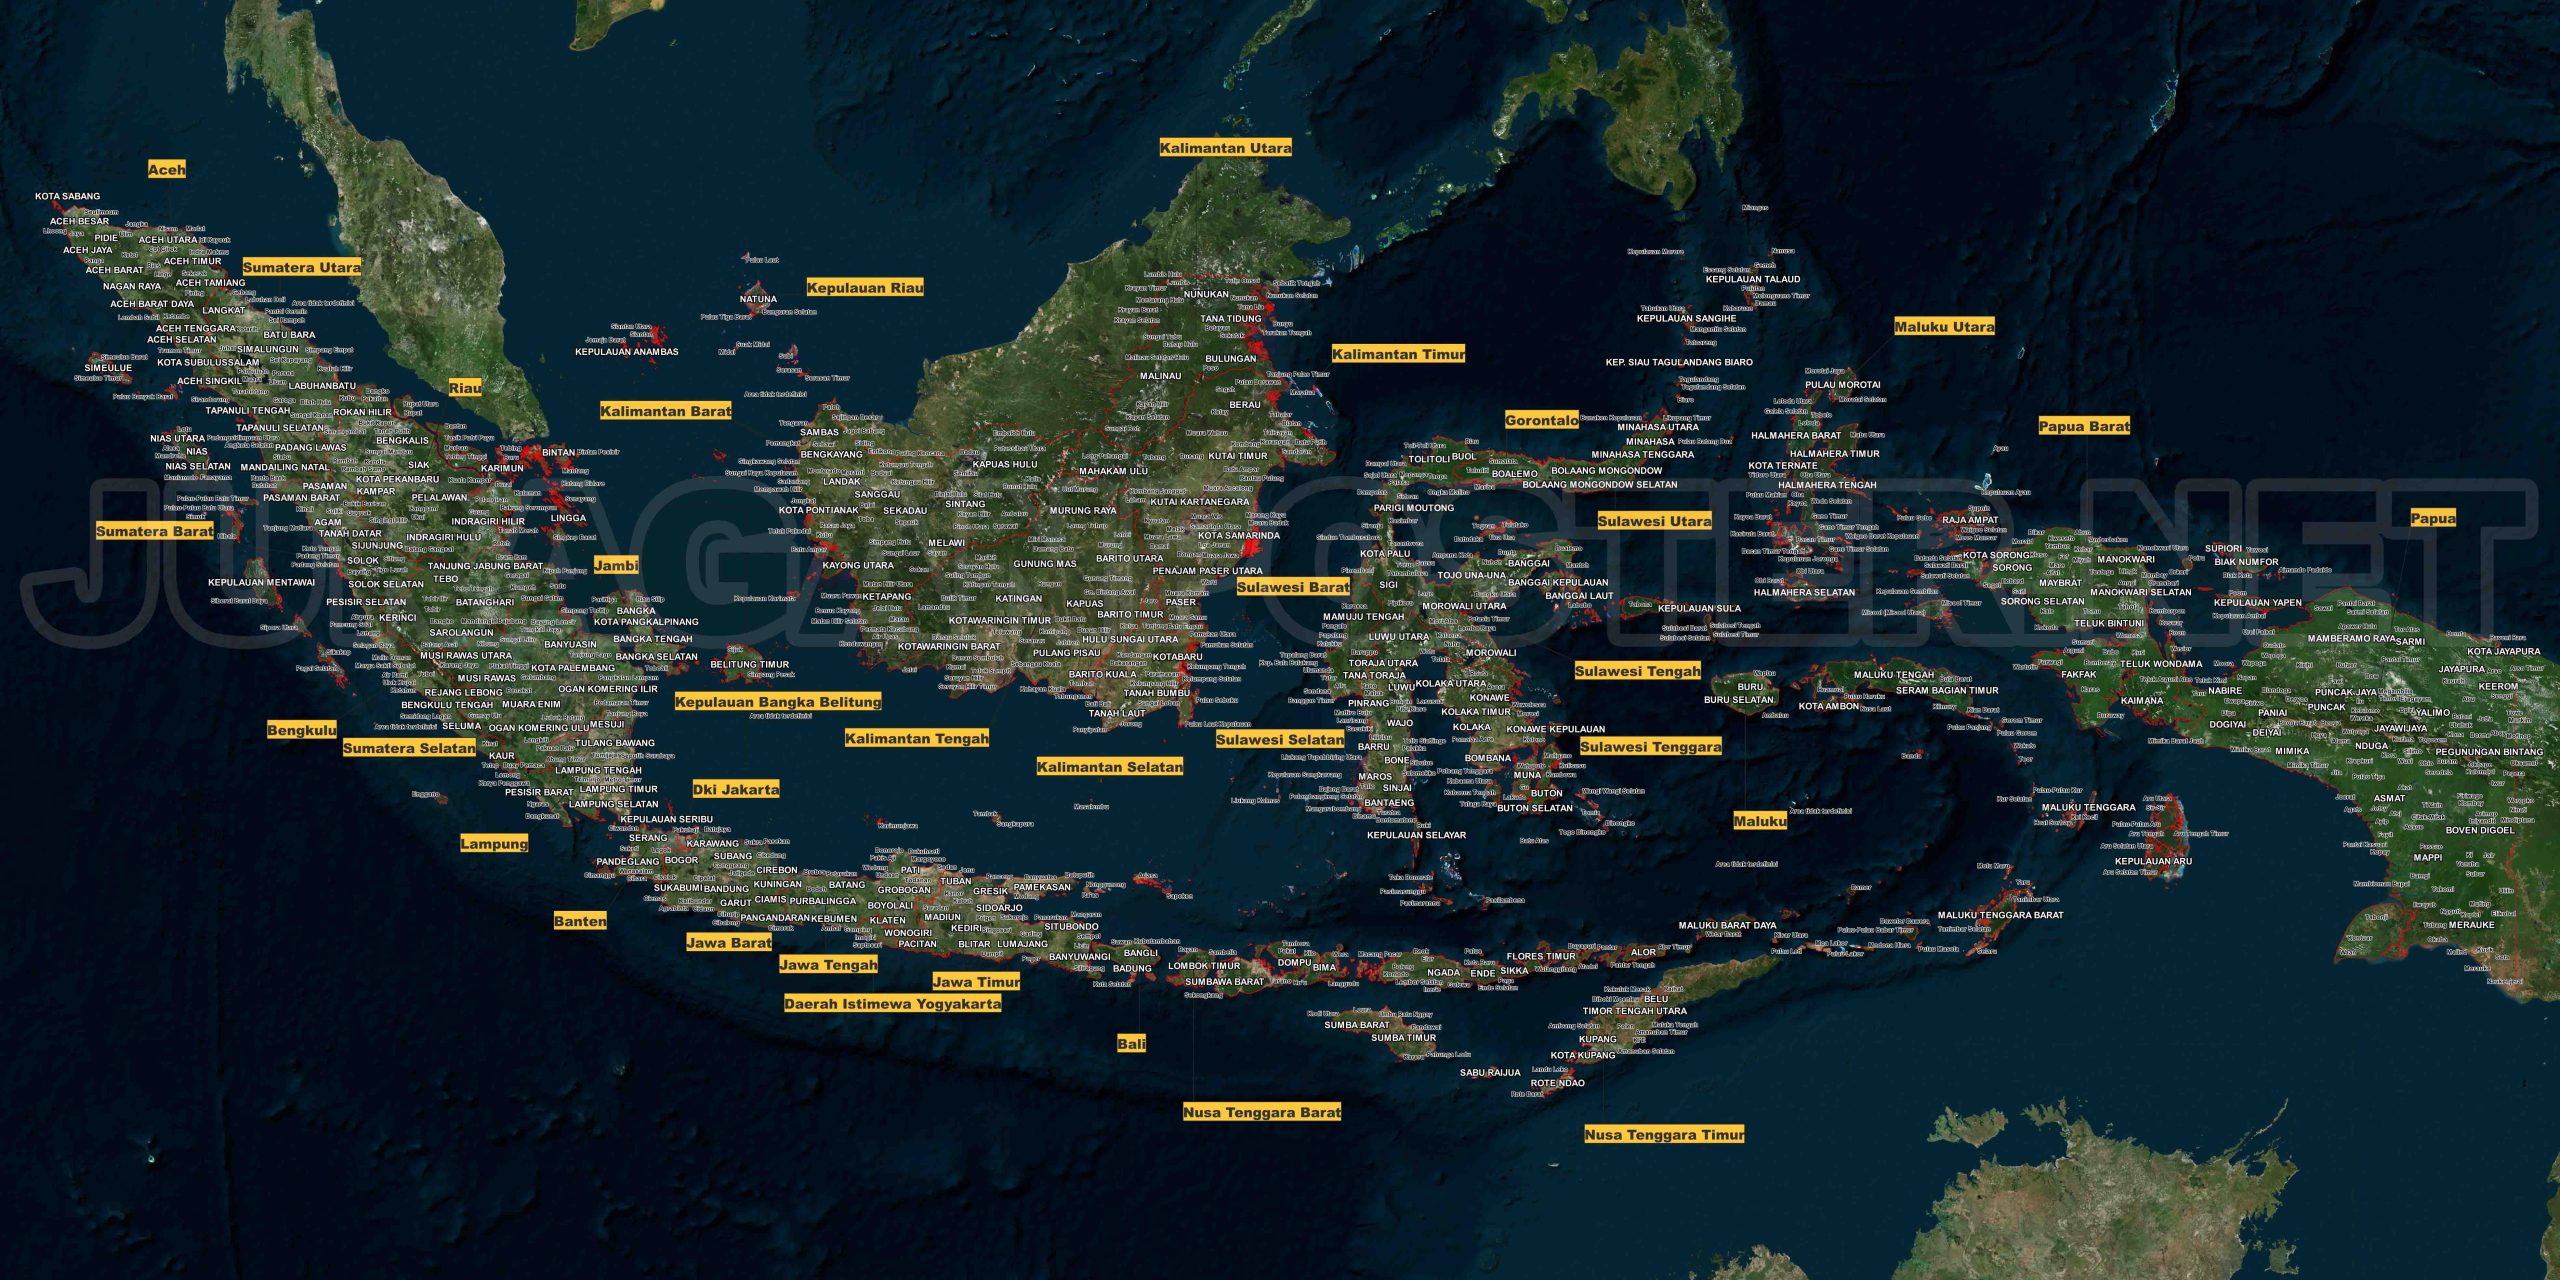 Peta Geologi Indonesia: Studi Bumi dan Batuan